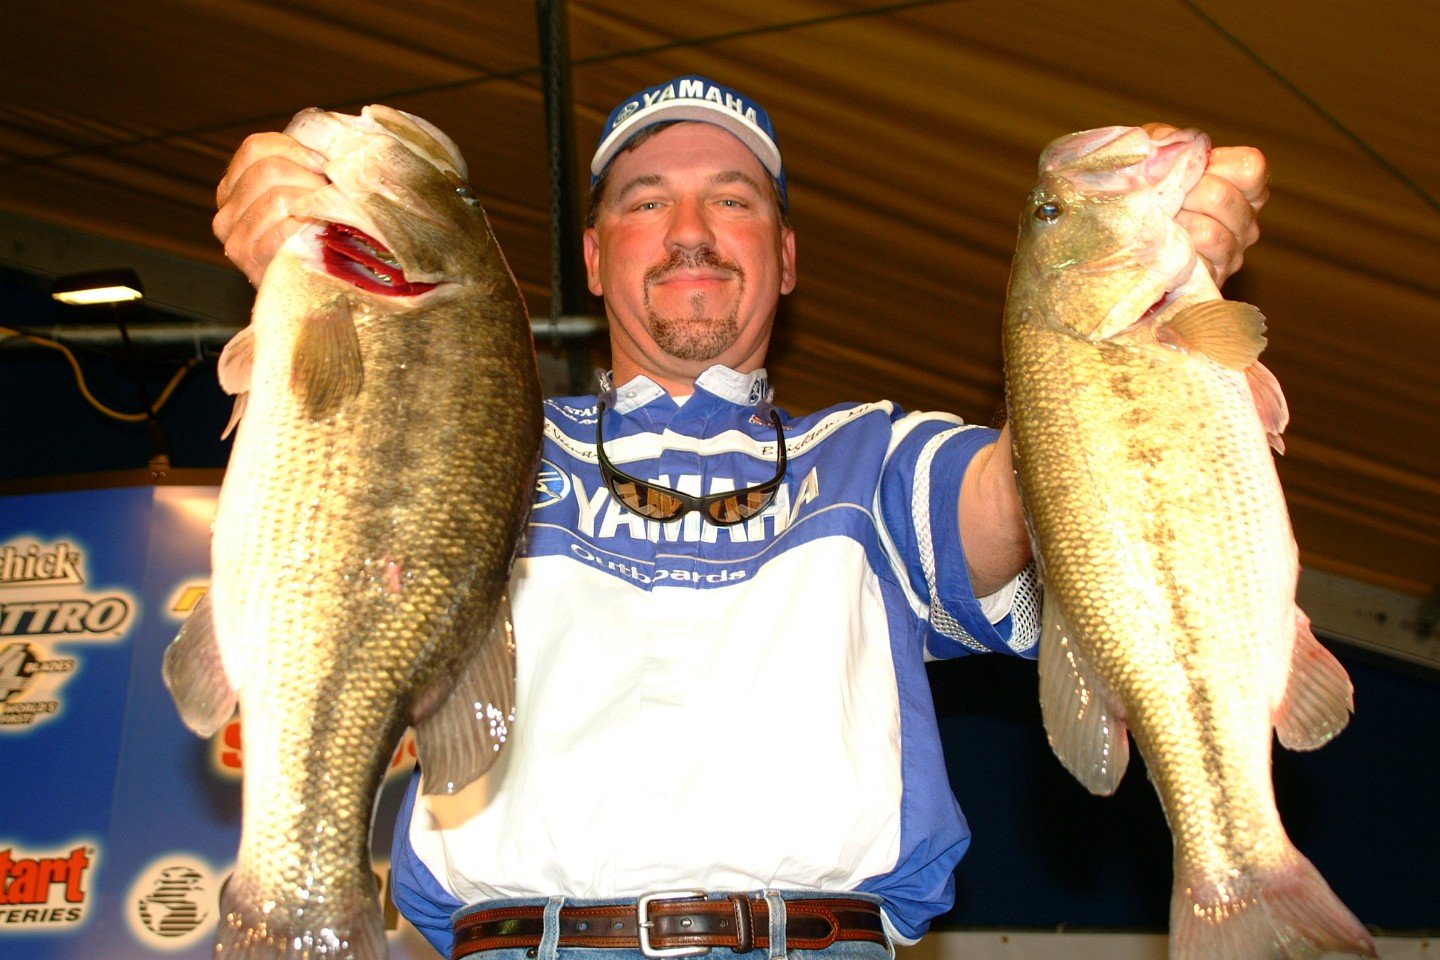 Nashville Predators sponsoring fishing tournament Old Hickory Lake